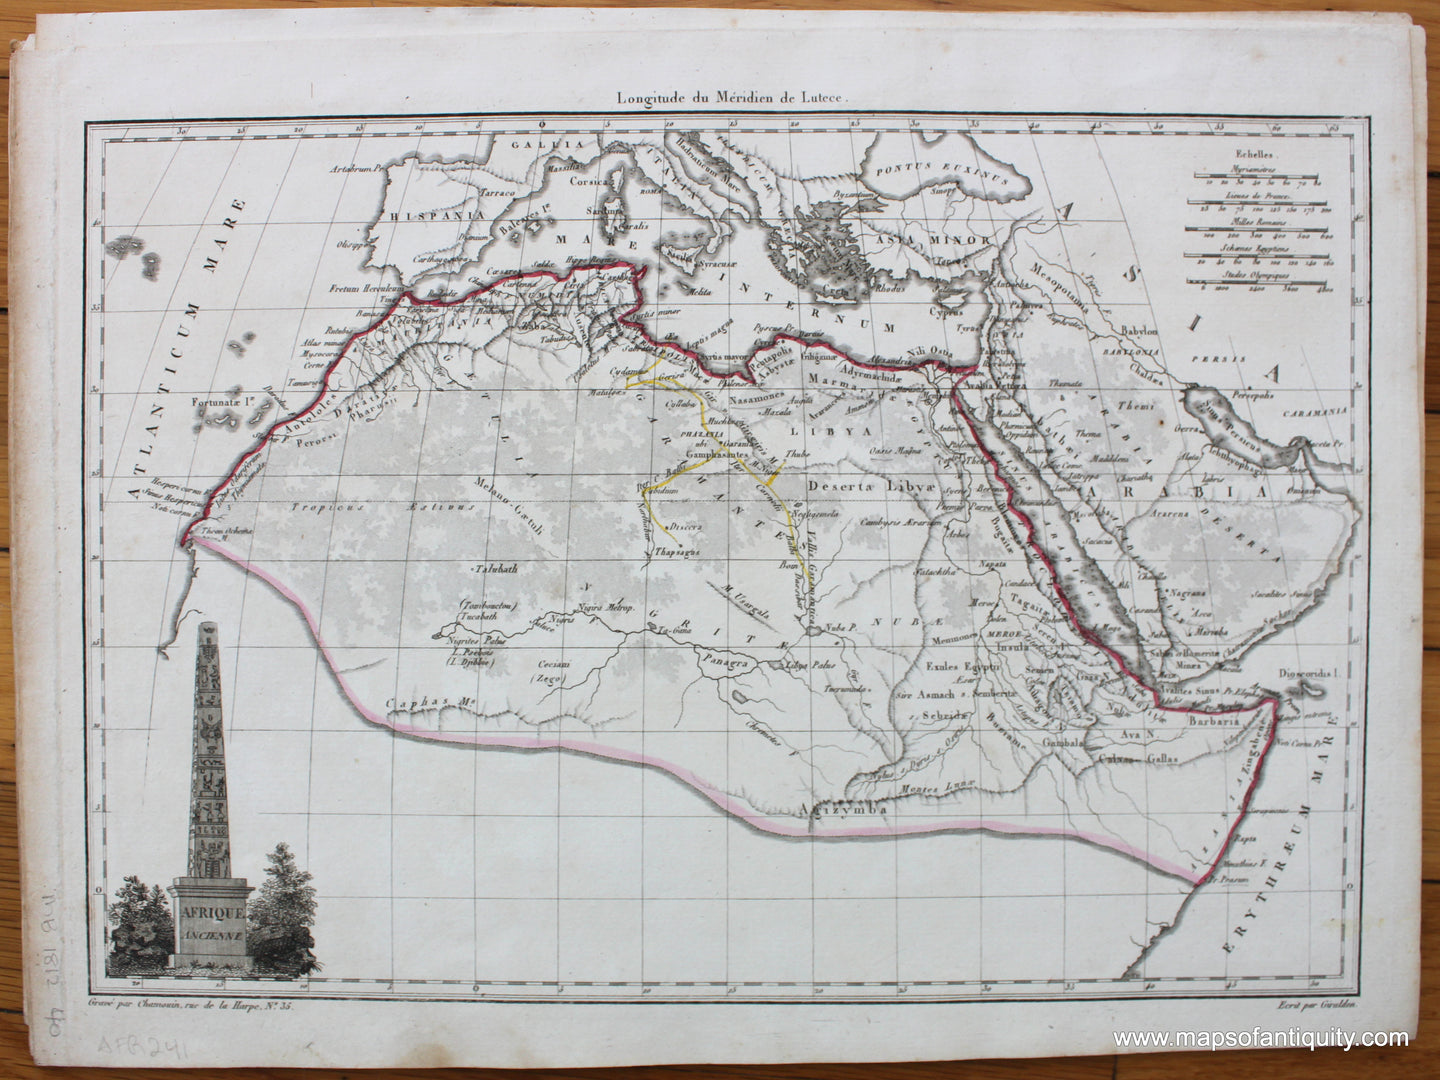 Antique-Hand-Colored-Map-Afrique-Ancienne-Ancient-Africa-1812-Malte-Brun-Lapie-1800s-19th-century-Maps-of-Antiquity